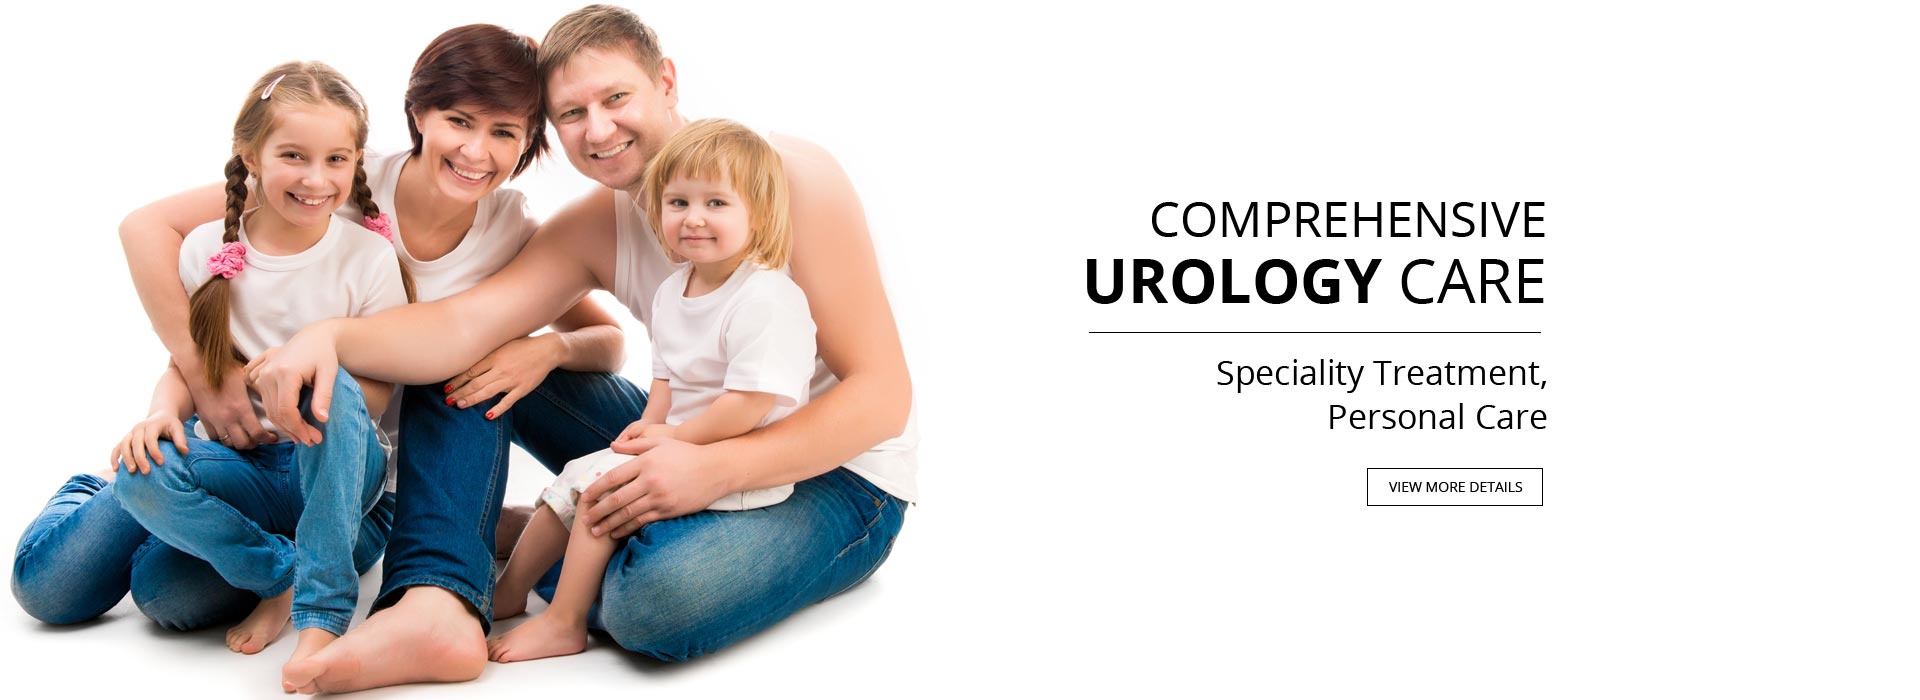 Comprehensive Urology Care